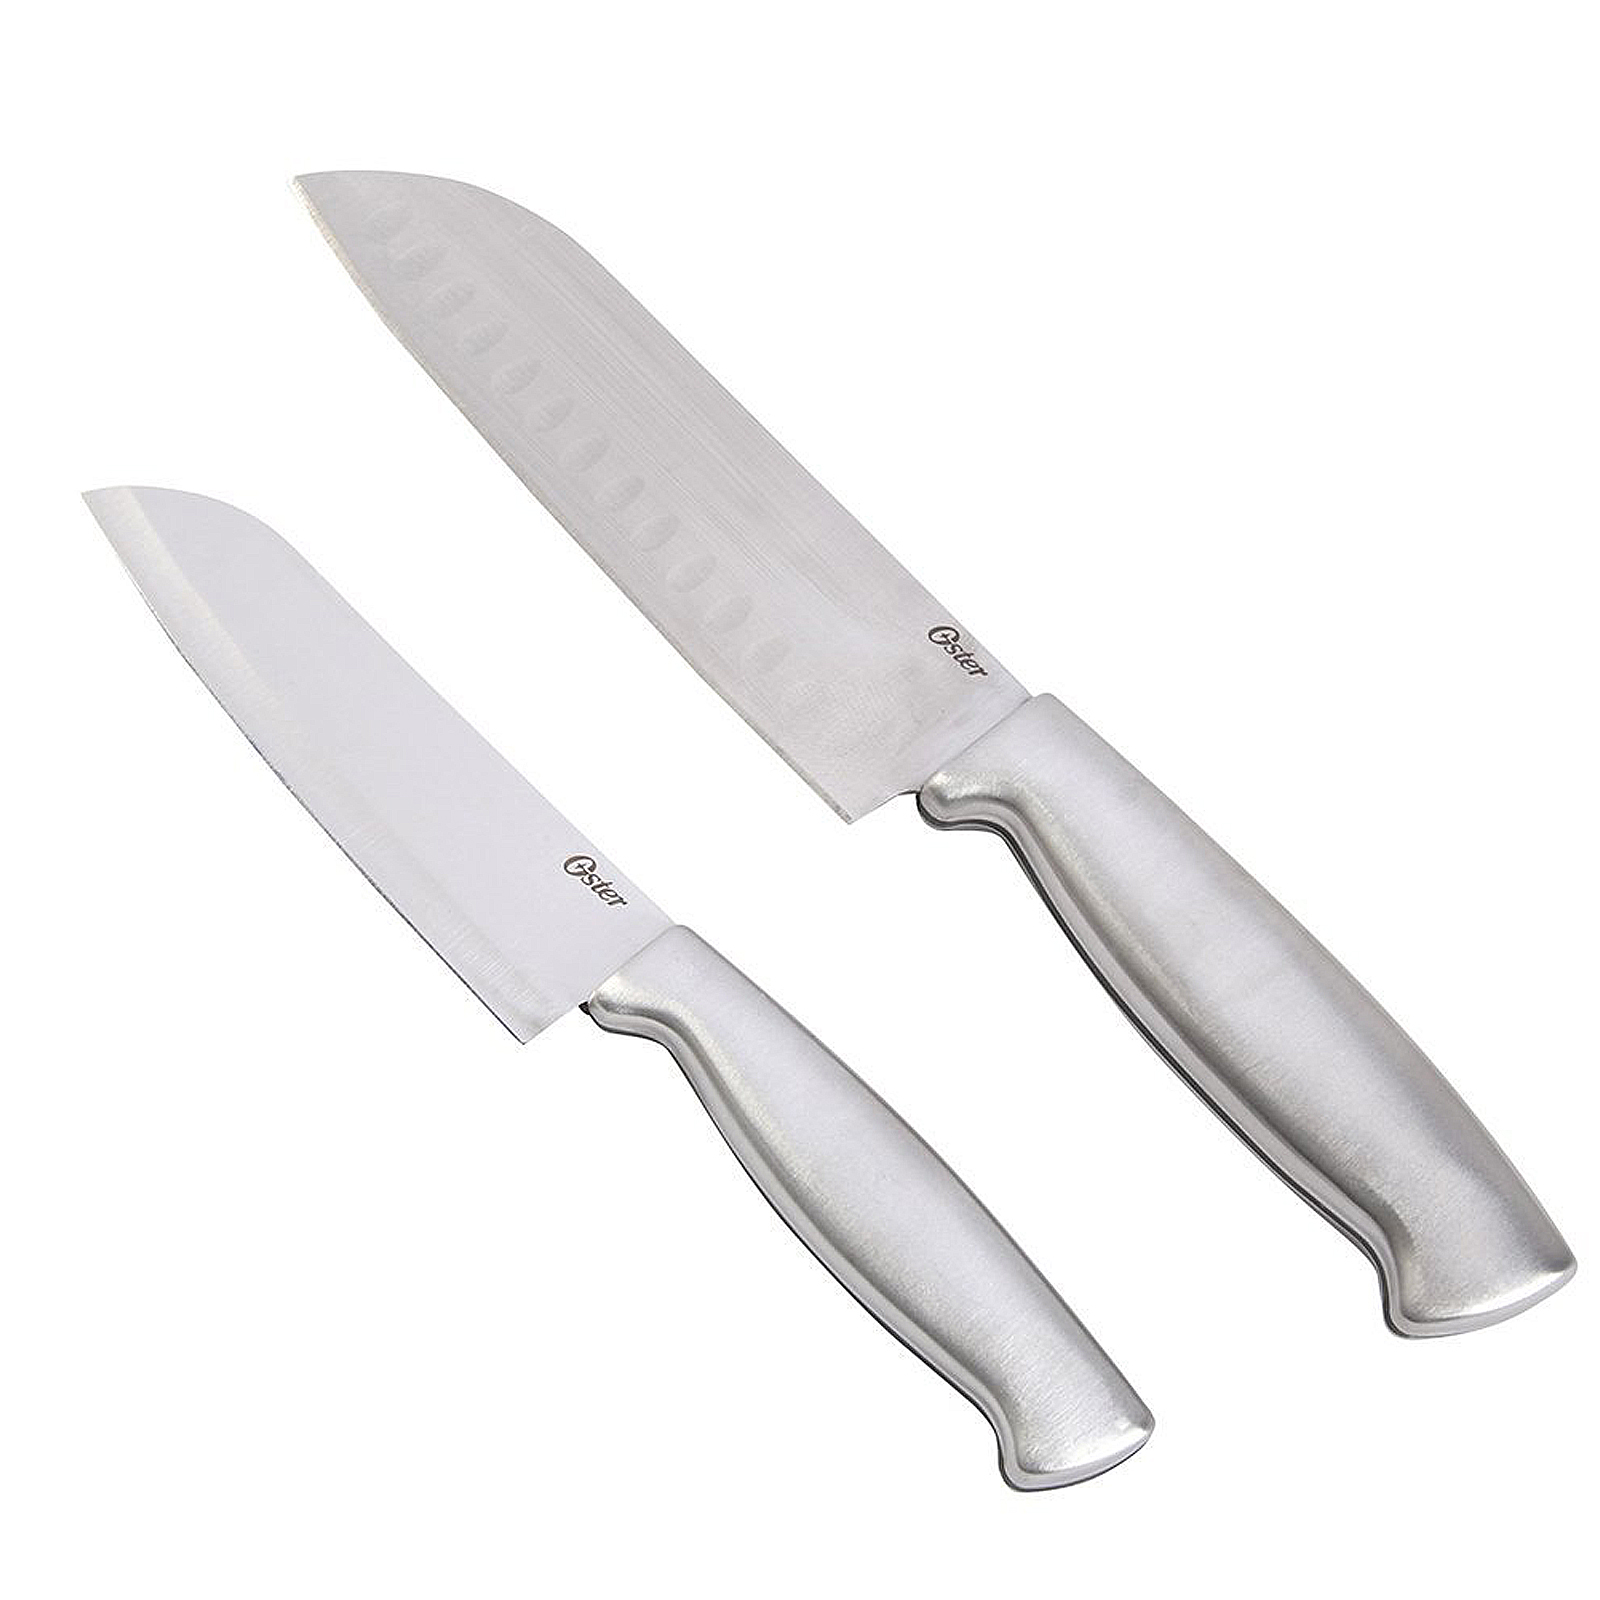 Oster Baldwyn 2 pc Santoku Knife Set - Stainless Steel Handle - SS - 1.2 mm - Clam Pack